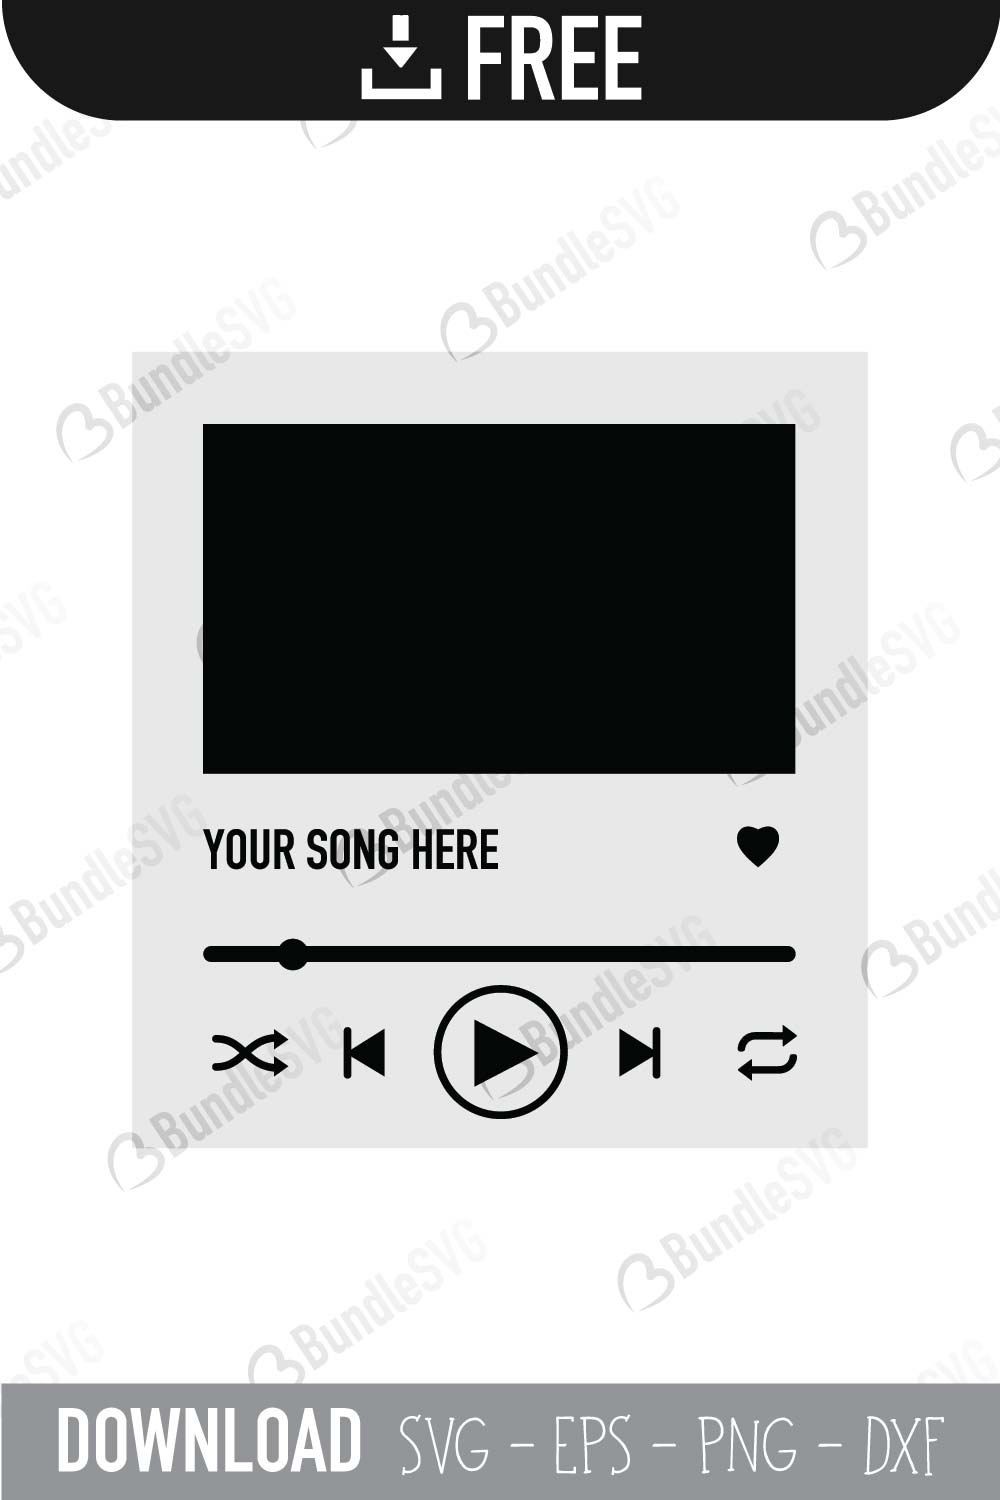 Download Music Player Button SVG Cut Files Free Download | BundleSVG